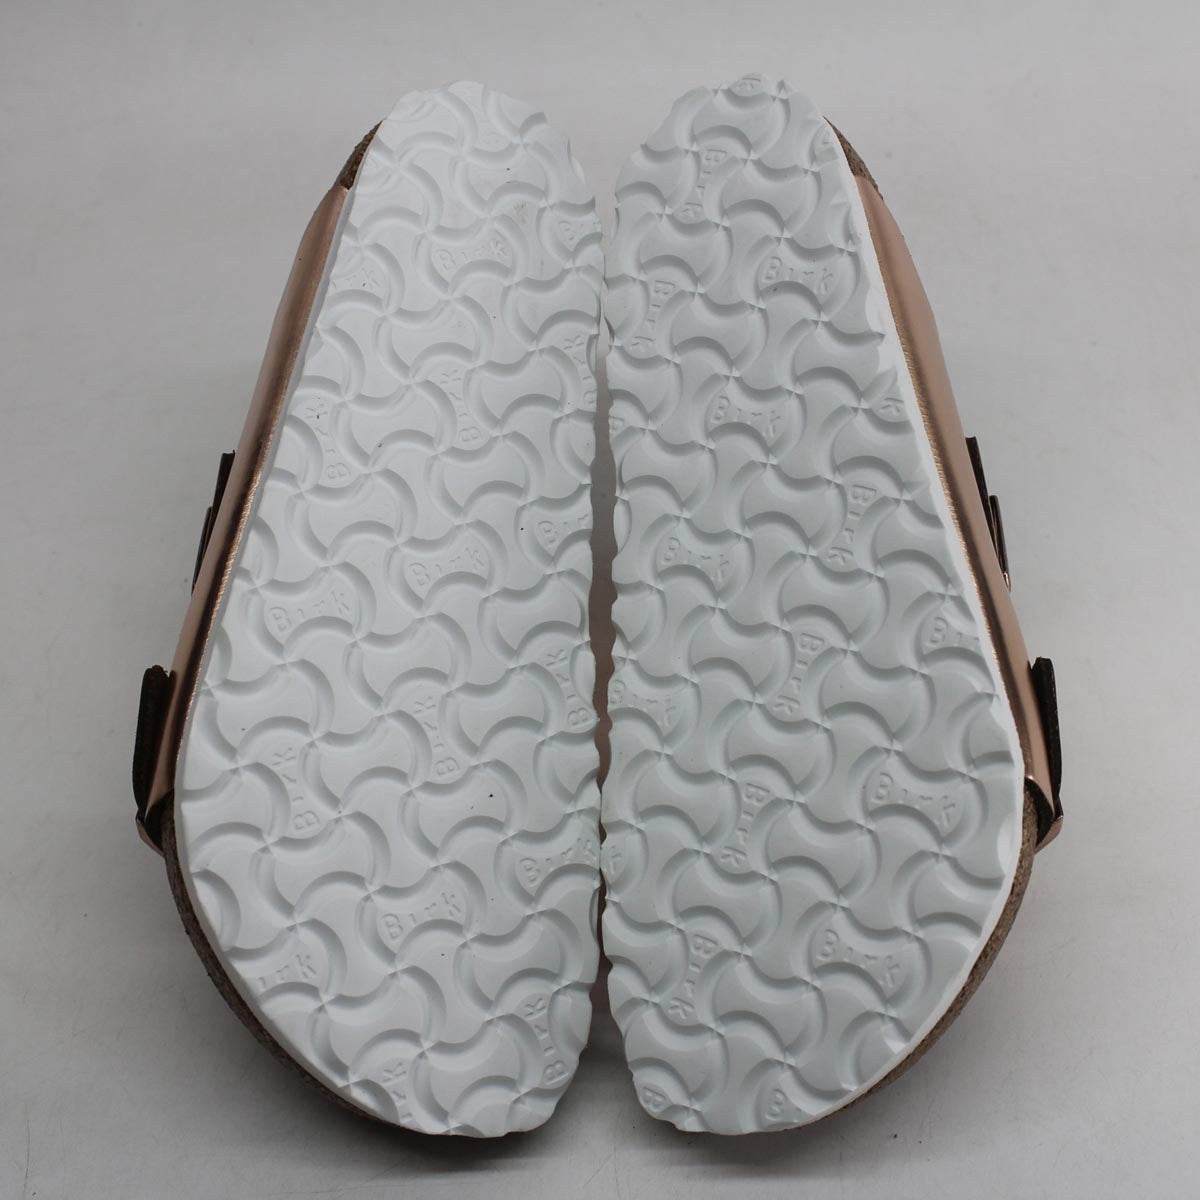 Birkenstock Arizona Metallic Copper Women Leather Soft Footbed Open-Back Sandals - UK 4.5